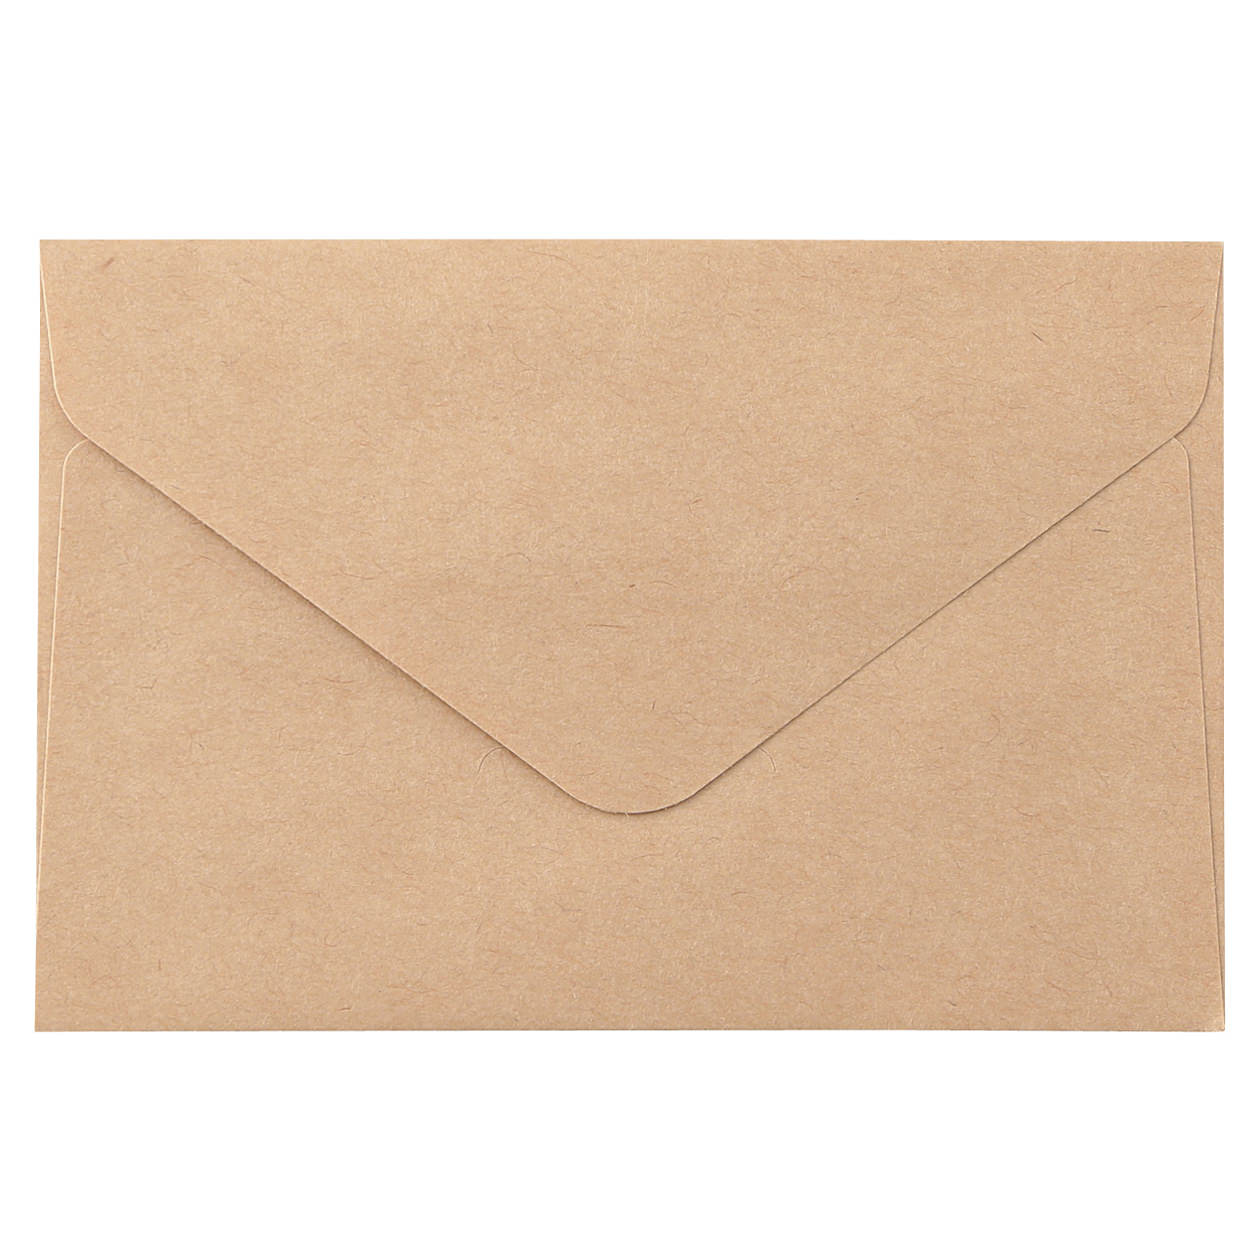 Ulikey Mini Enveloppes, 40pcs Enveloppes en Papier Kraft et 40pcs